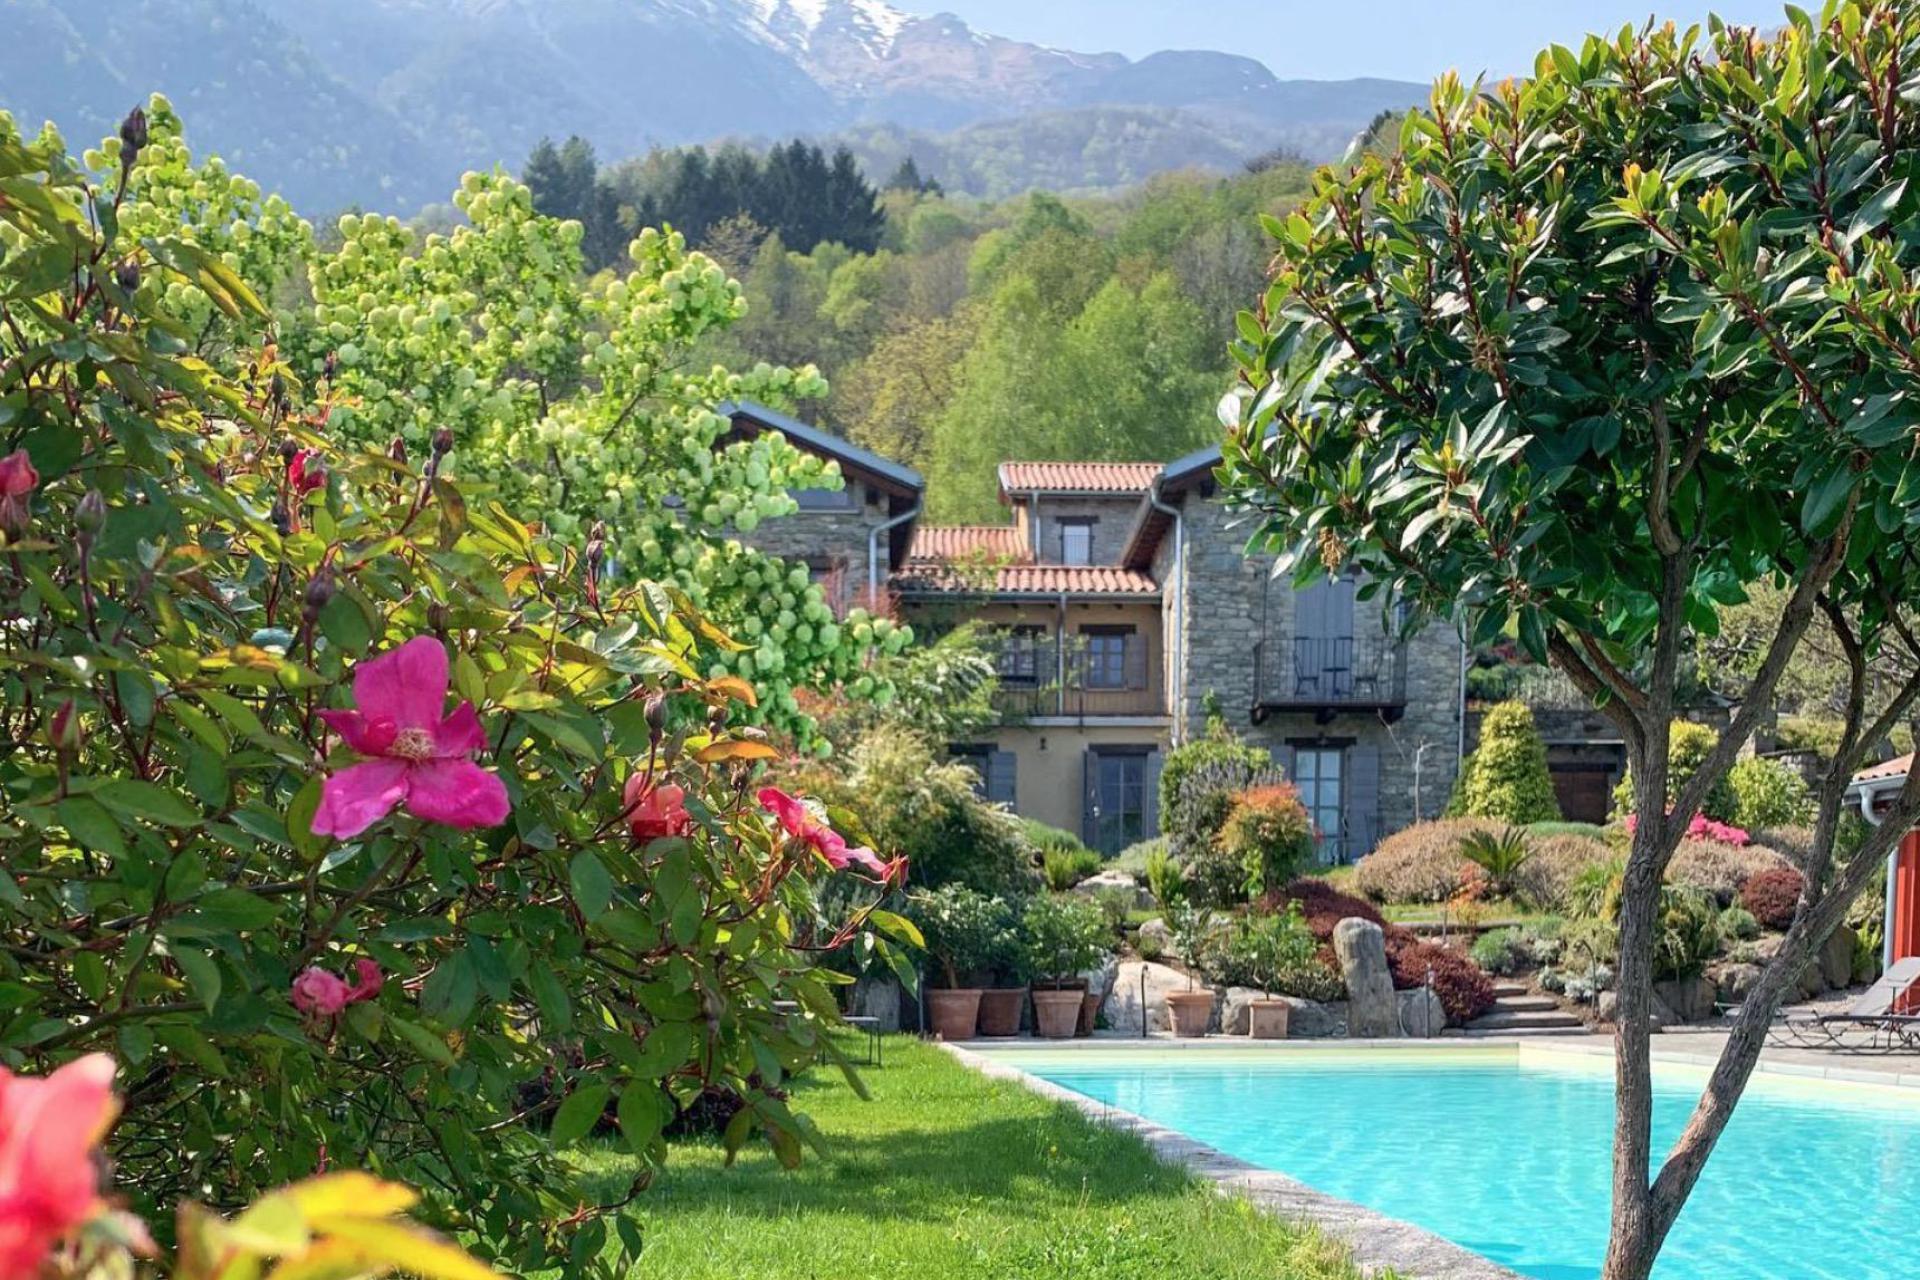 Stylish rooms and views of Lake Como